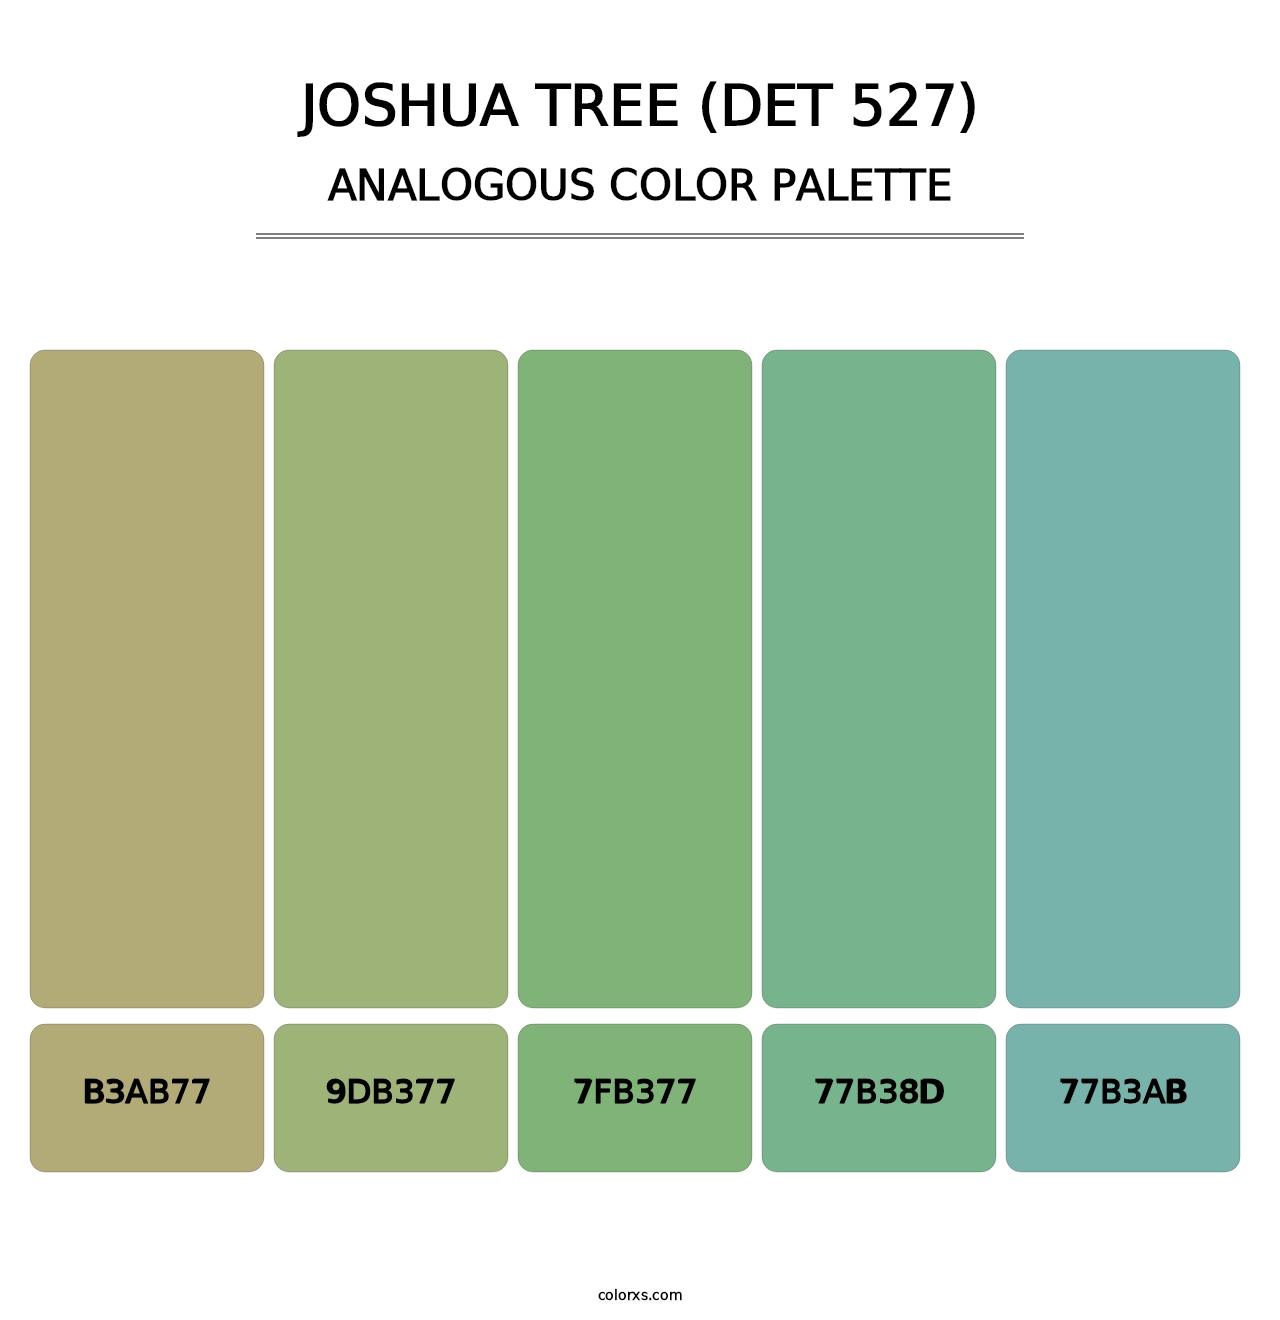 Joshua Tree (DET 527) - Analogous Color Palette